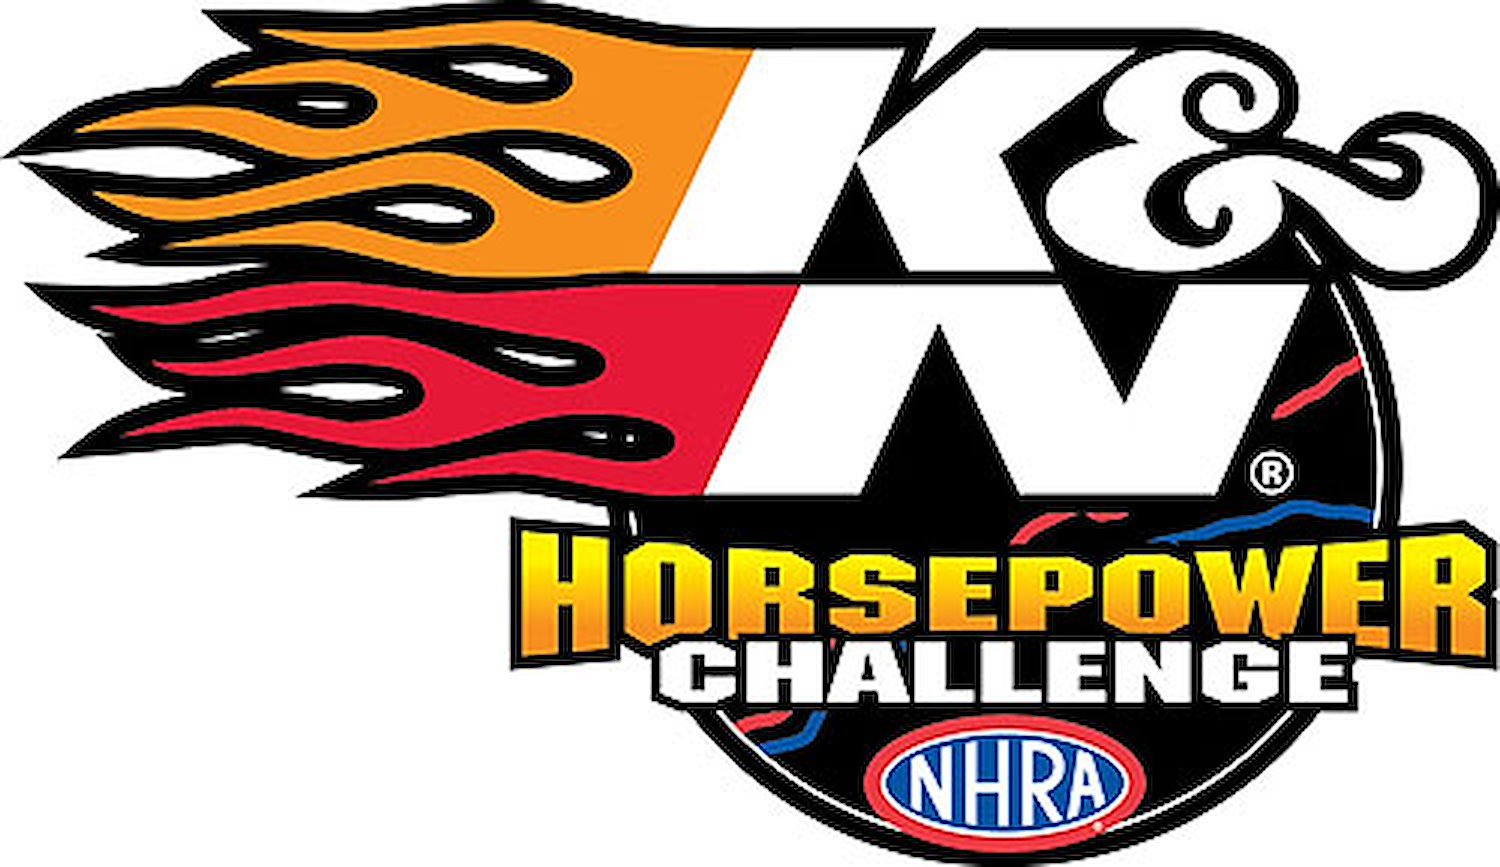 Decal NHRA Horsepower Challenge 5-7/8" x 3-7/16"